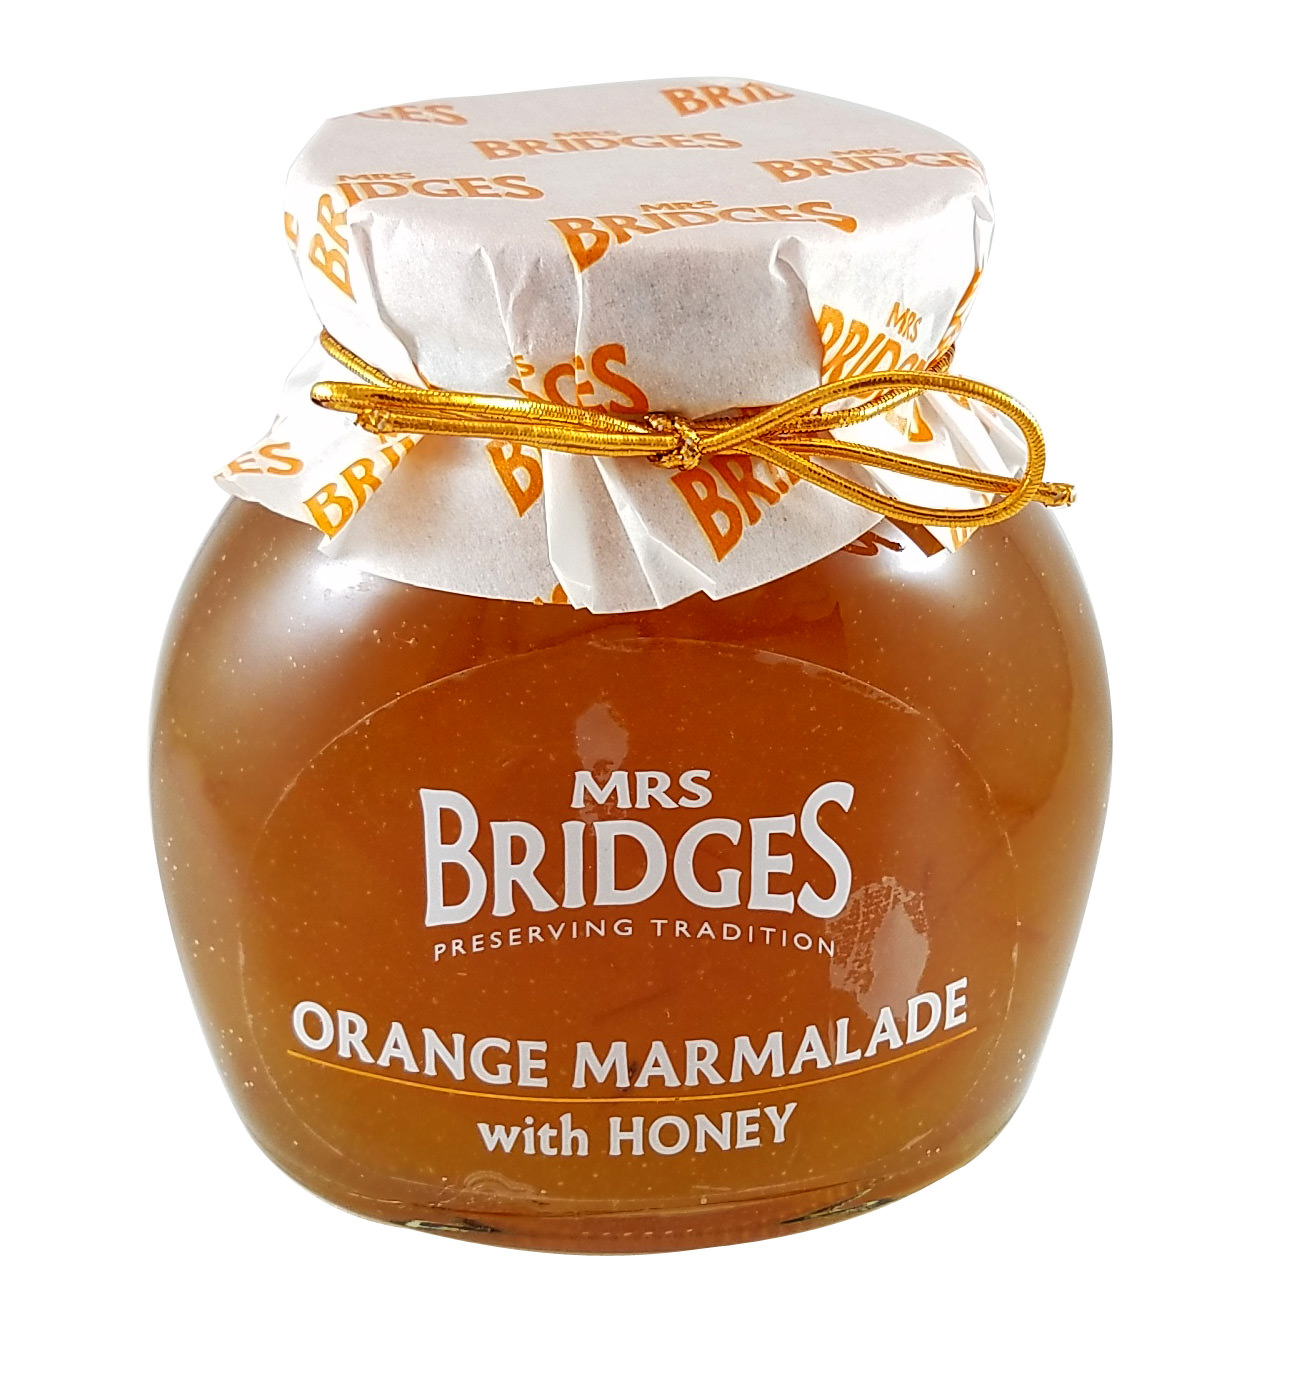 Mrs Bridges Orange Marmalade with Honey, 12 oz - Walmart.com